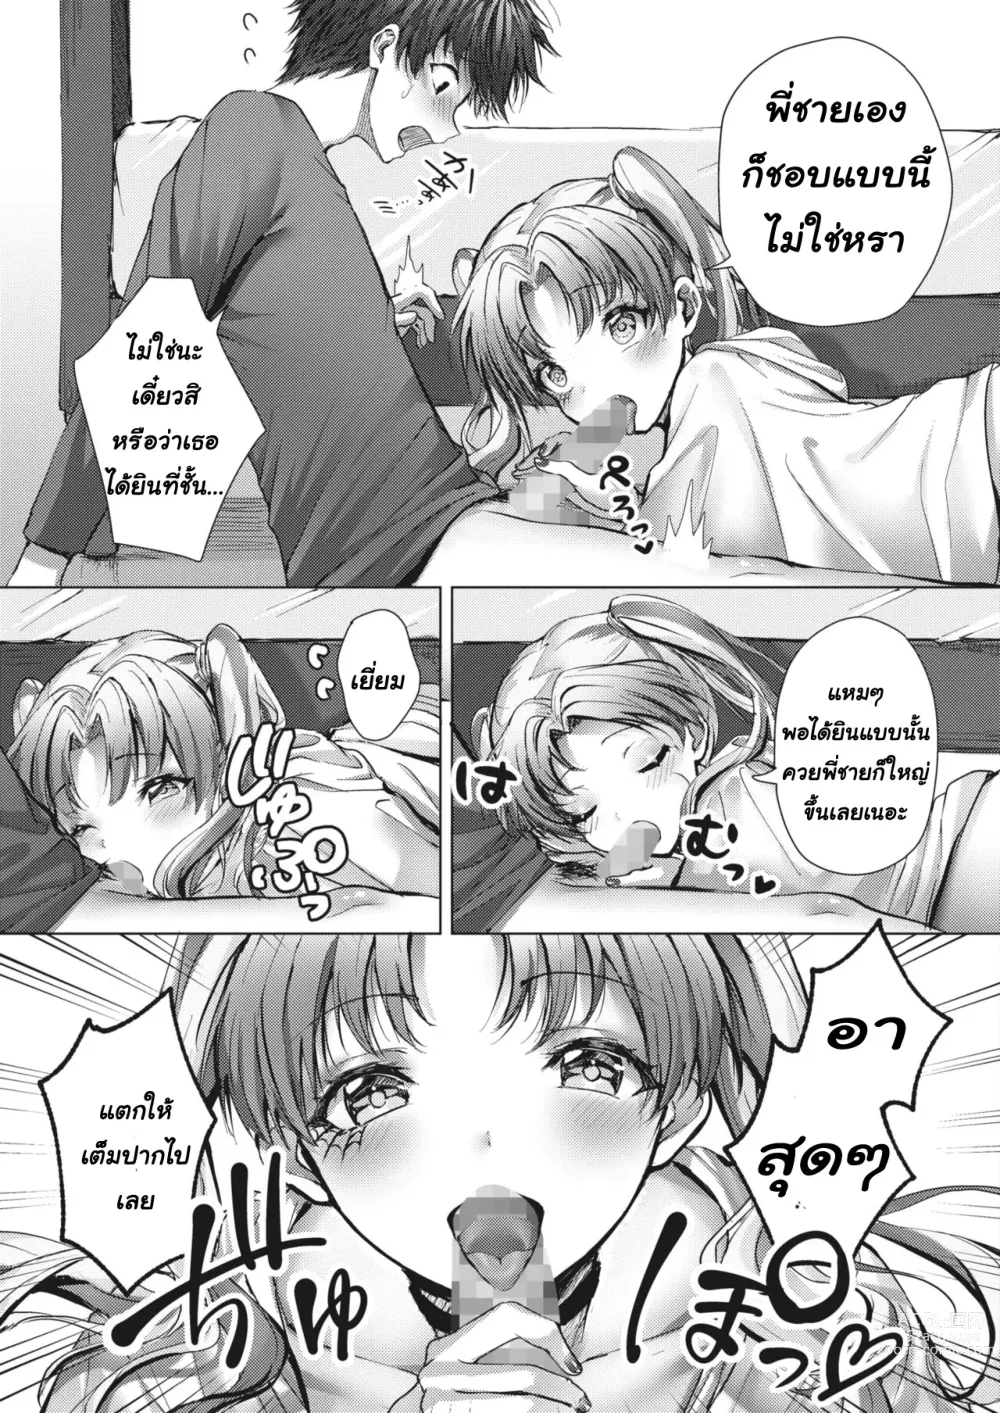 Page 7 of manga แม้ฮัลโลวีนหลอนผ่านไปใจยังเสียวได้